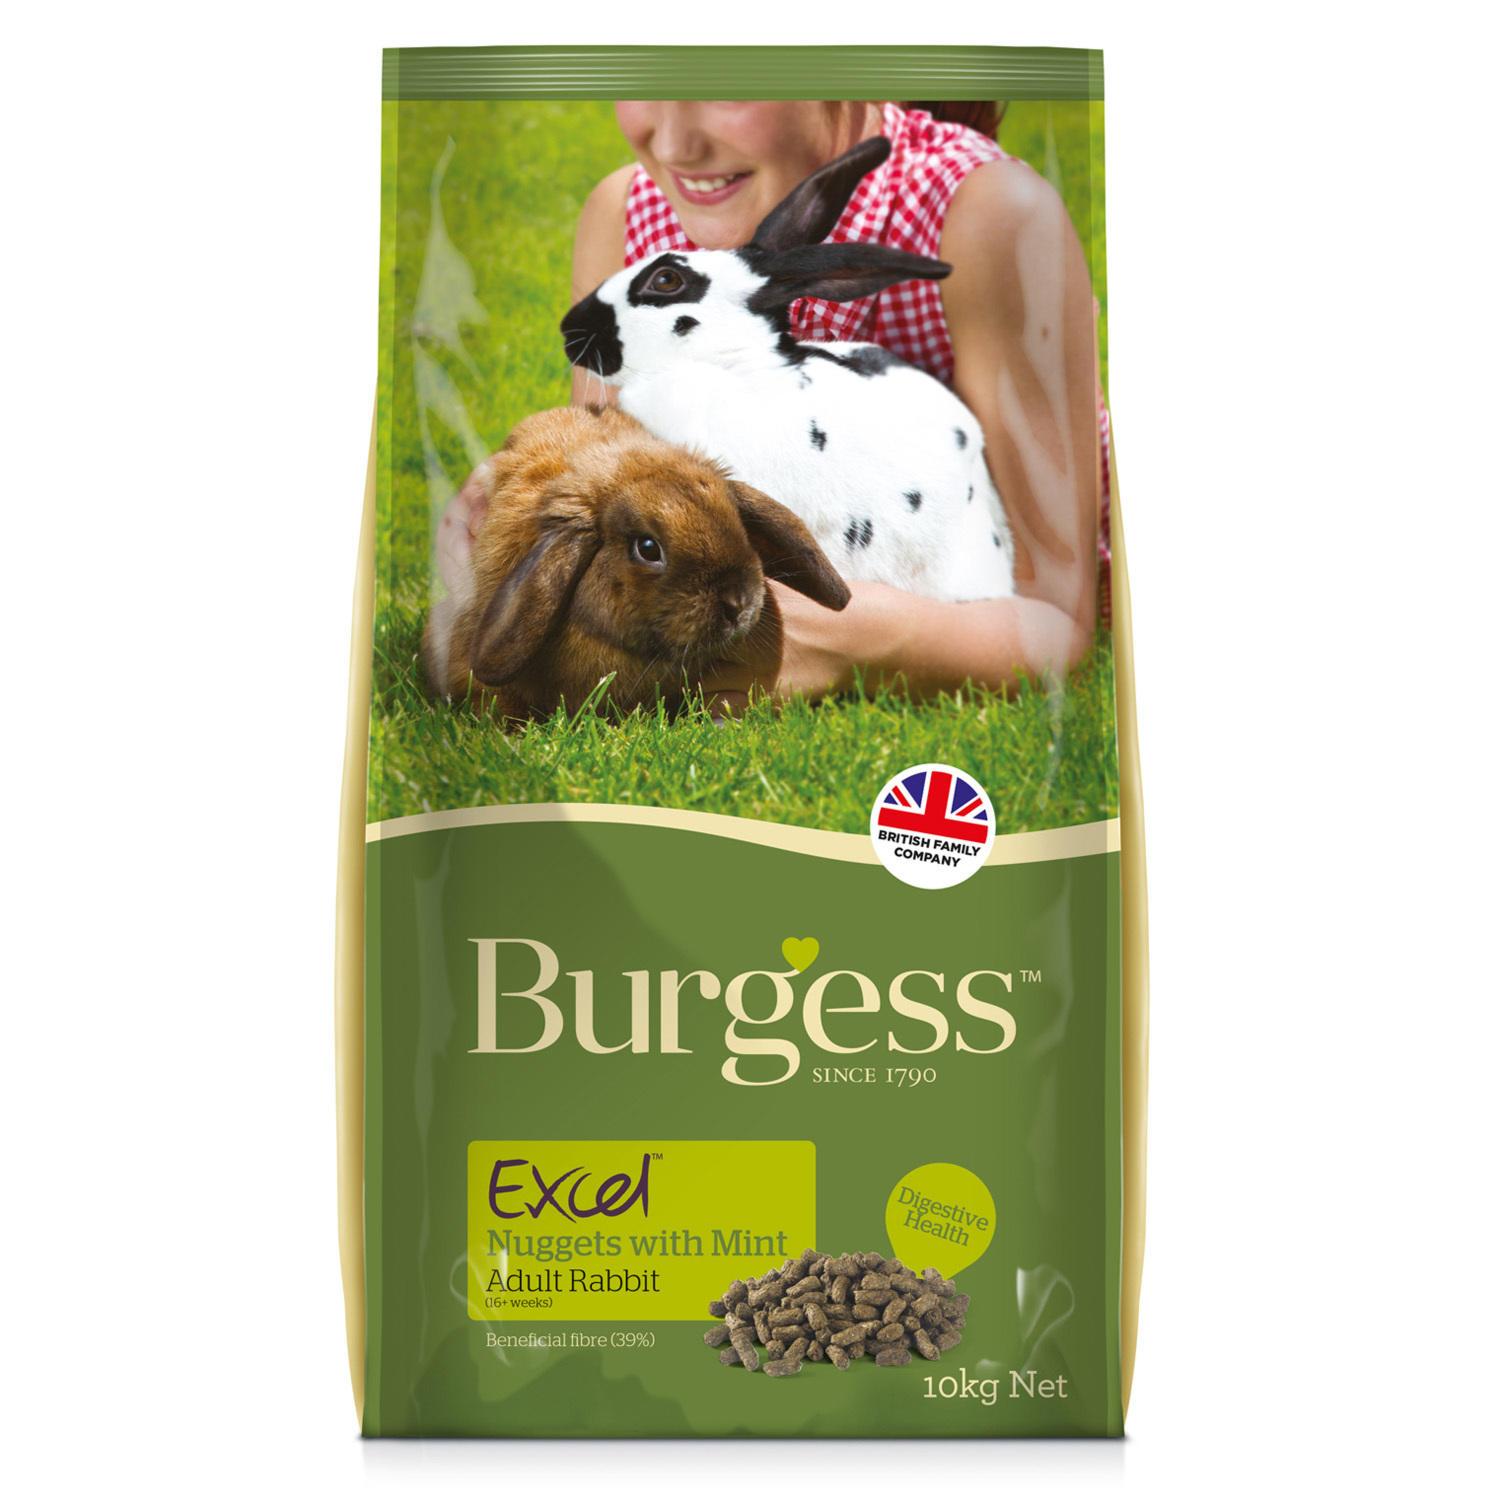 Burgess excel adult rabbit nuggets